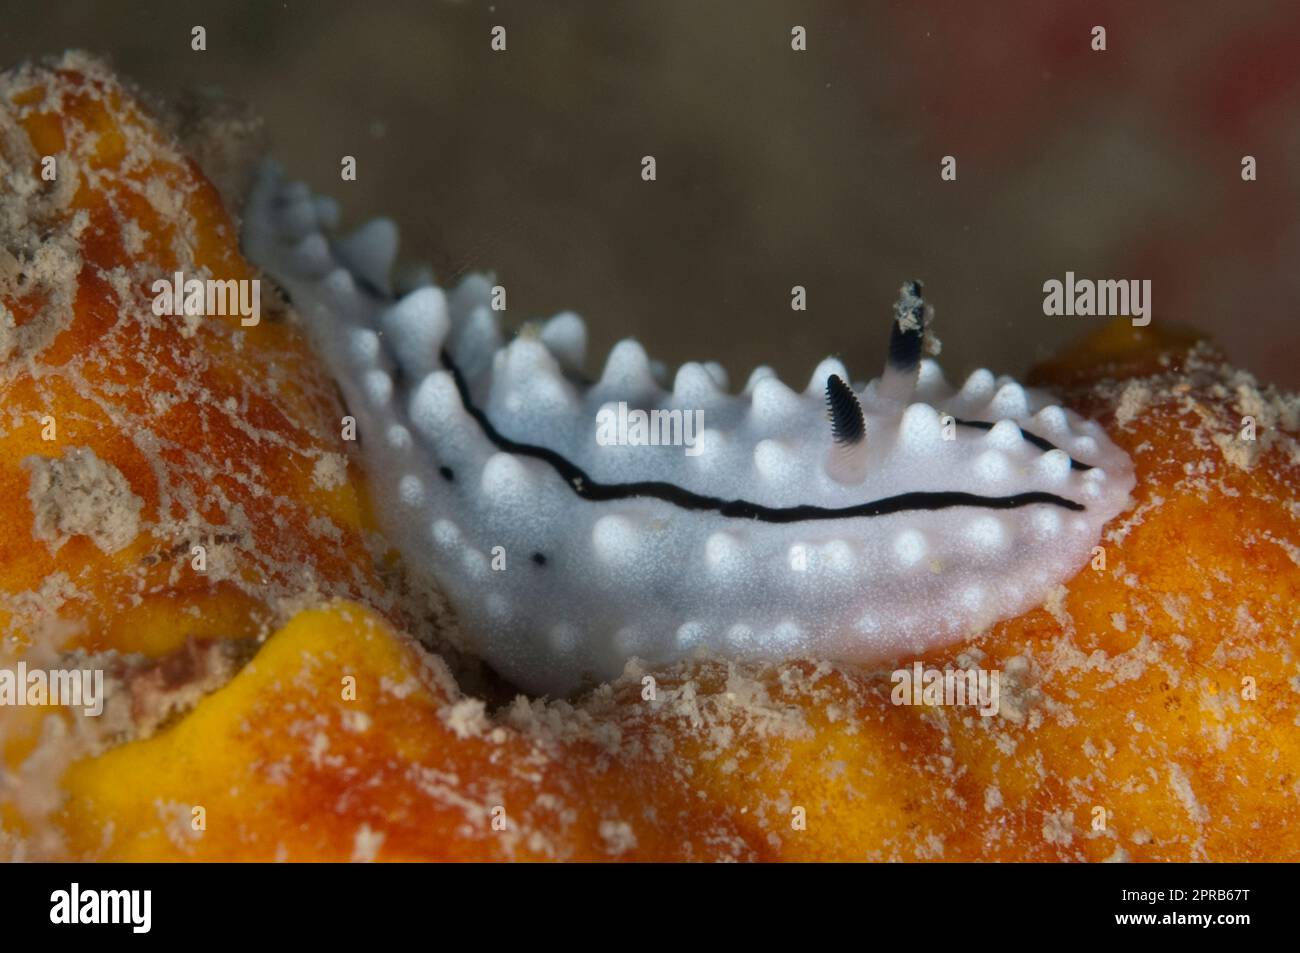 Rudman's Phyllidiella Nudibranch, Phyllidiella rudmani, with tubercules on Sponge, Porifera Phylum, Shipwreck dive site, Pulau Putri, Thousand Islands Stock Photo